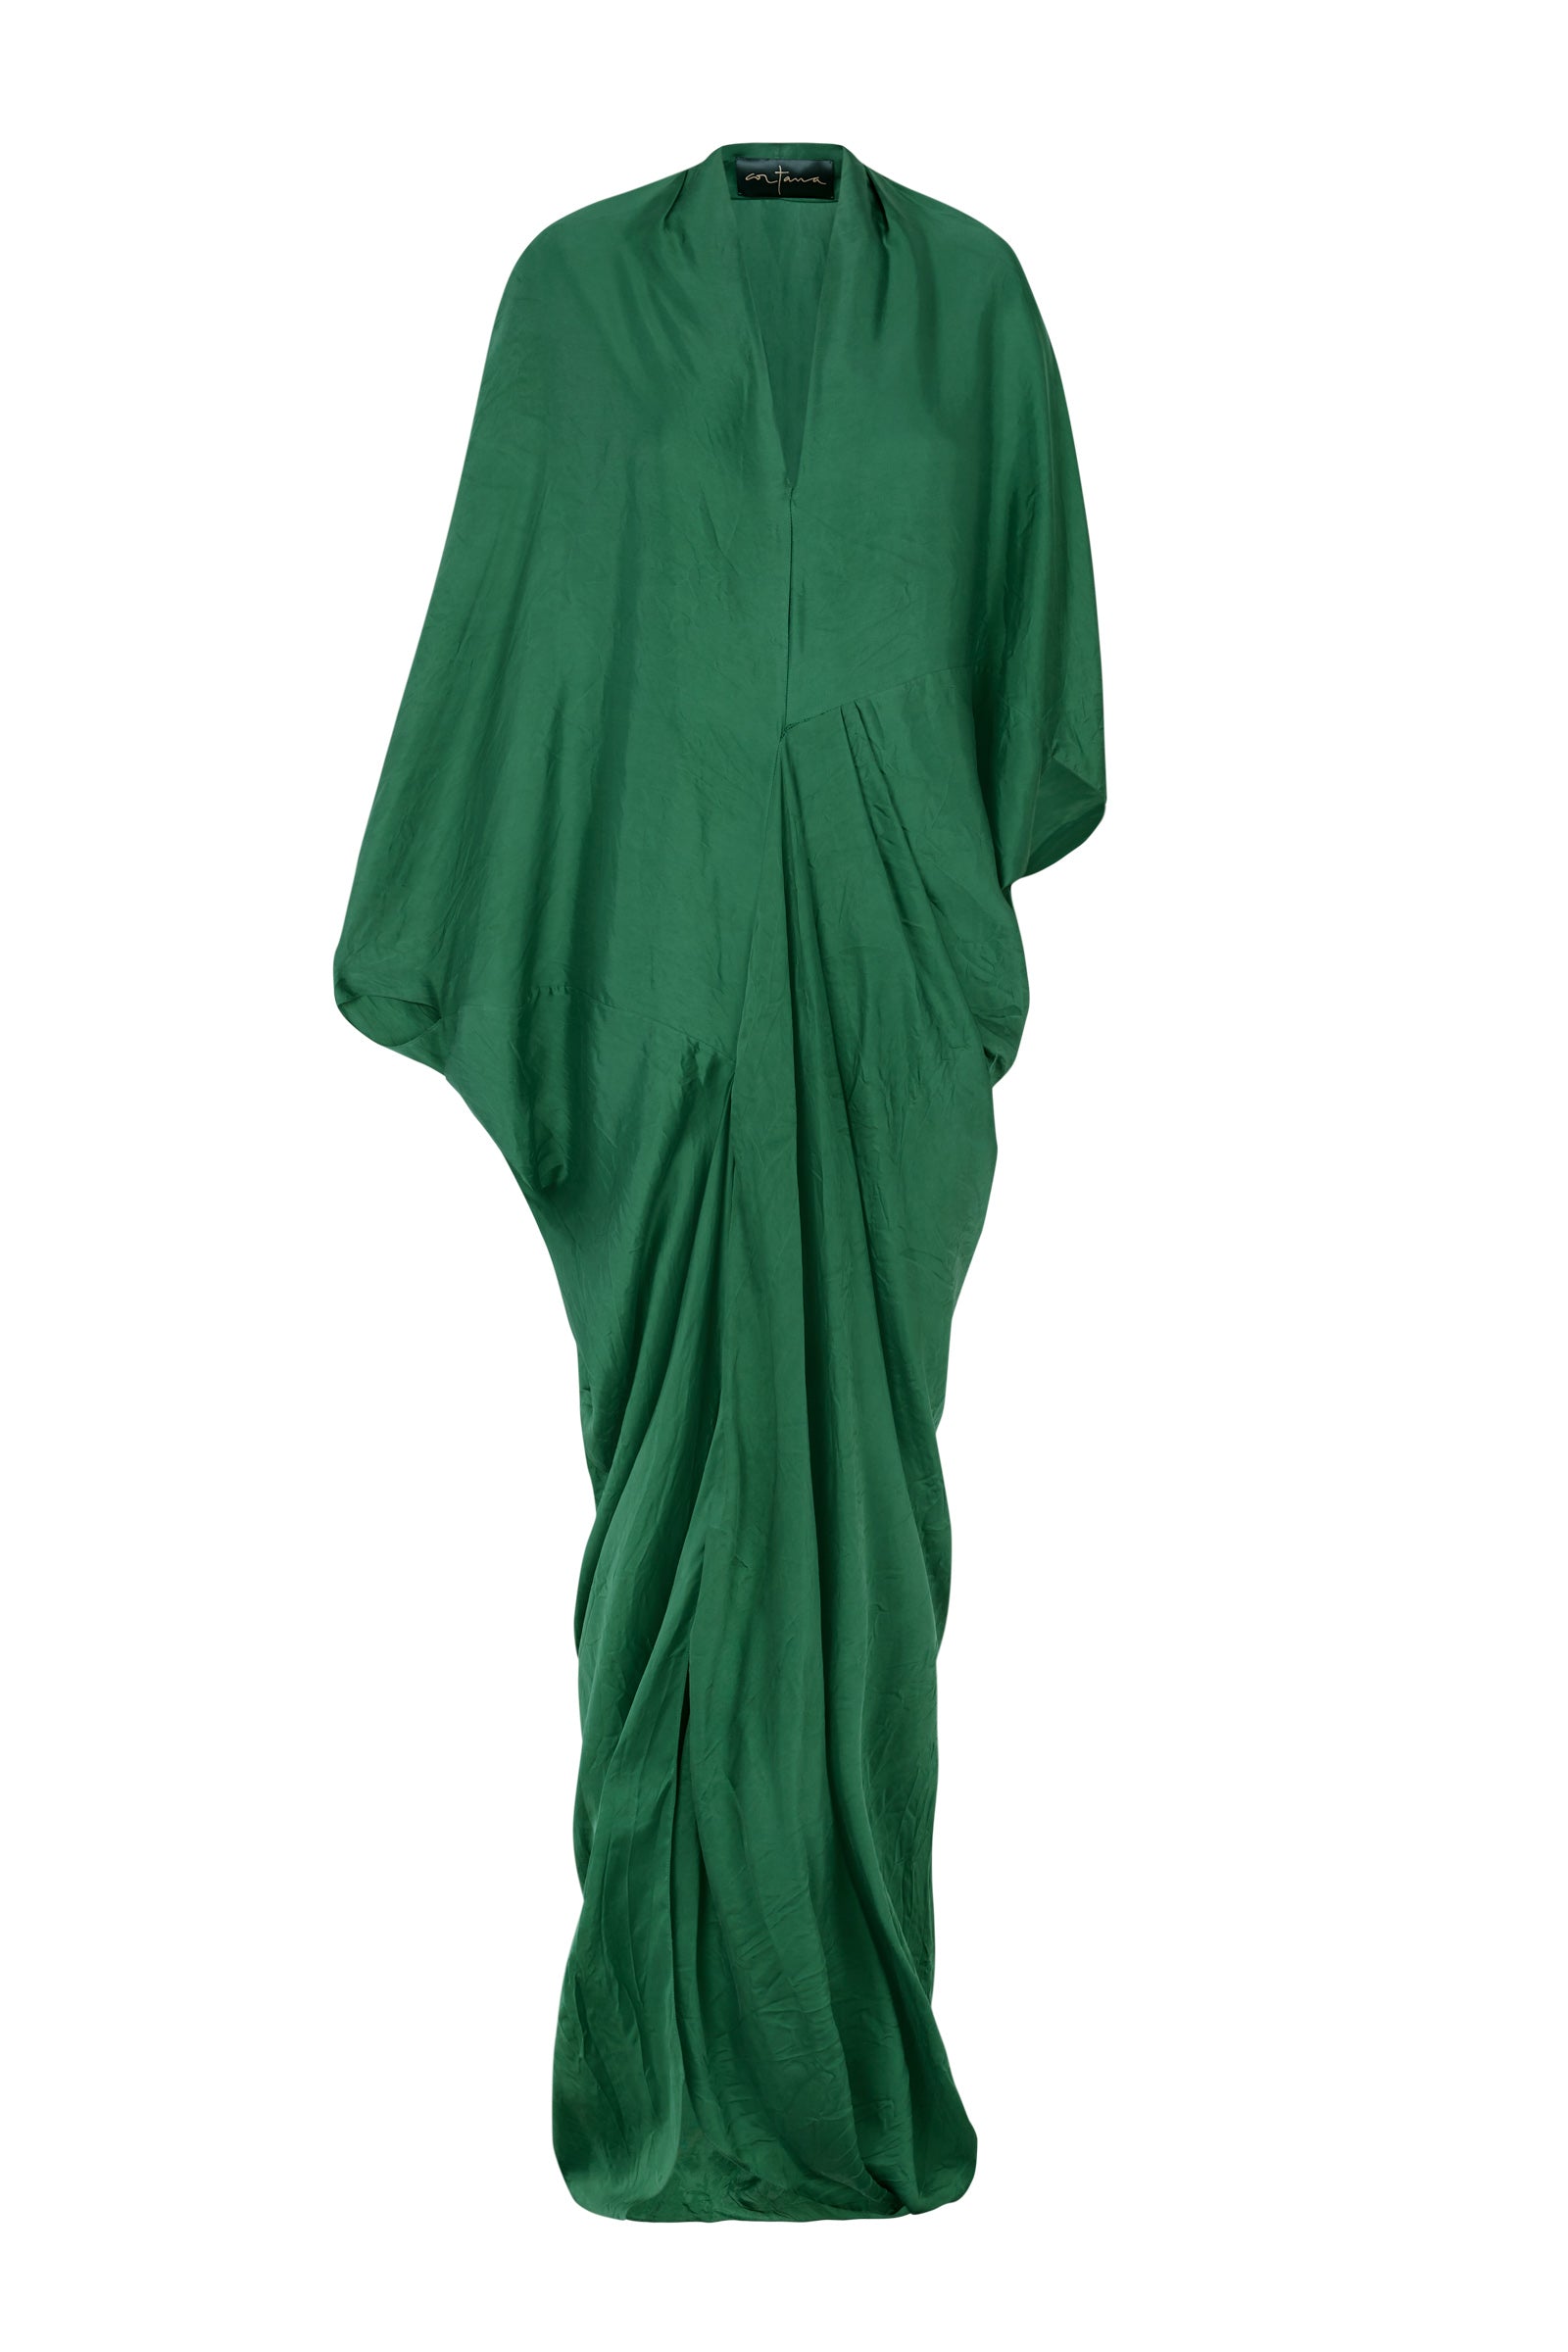 Tuva Dress - Emerald Green – Olakira Craft